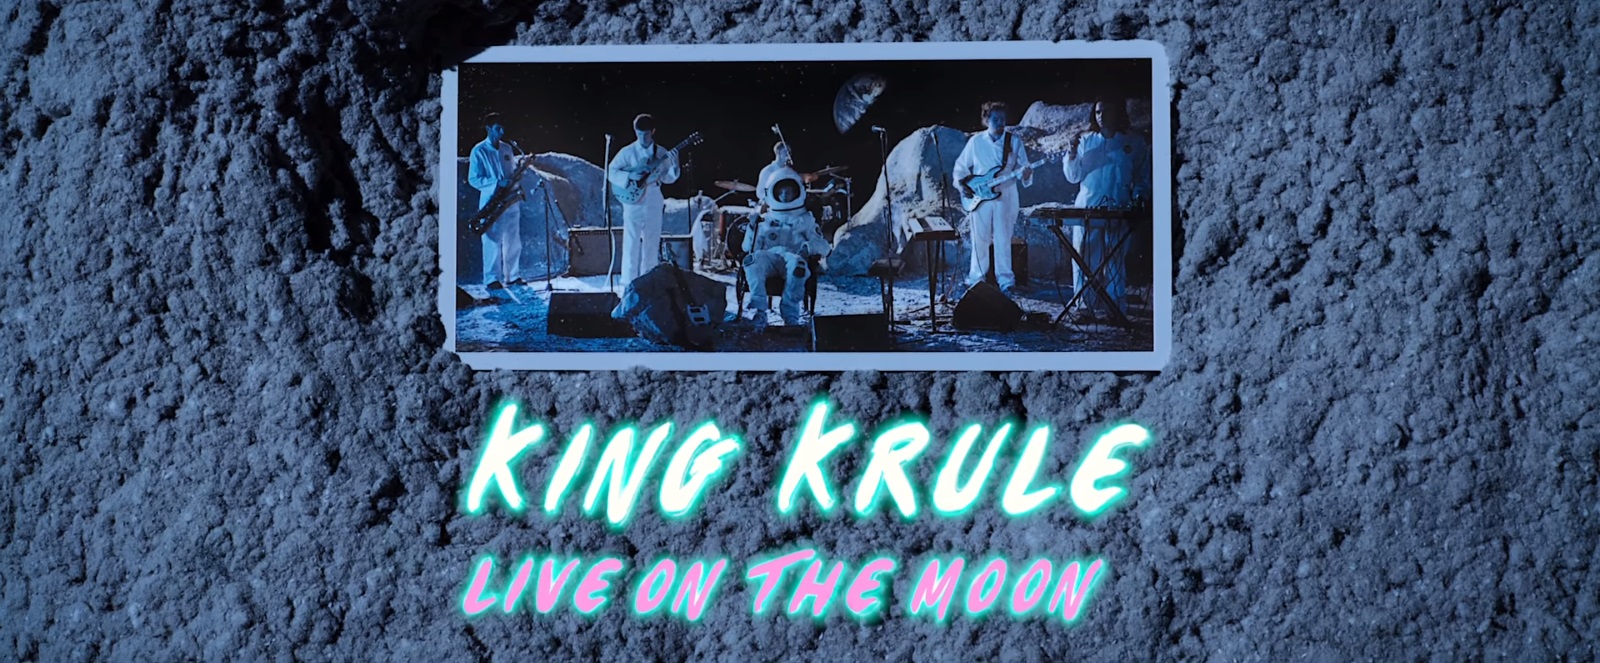 King Krule - Live on the Moon